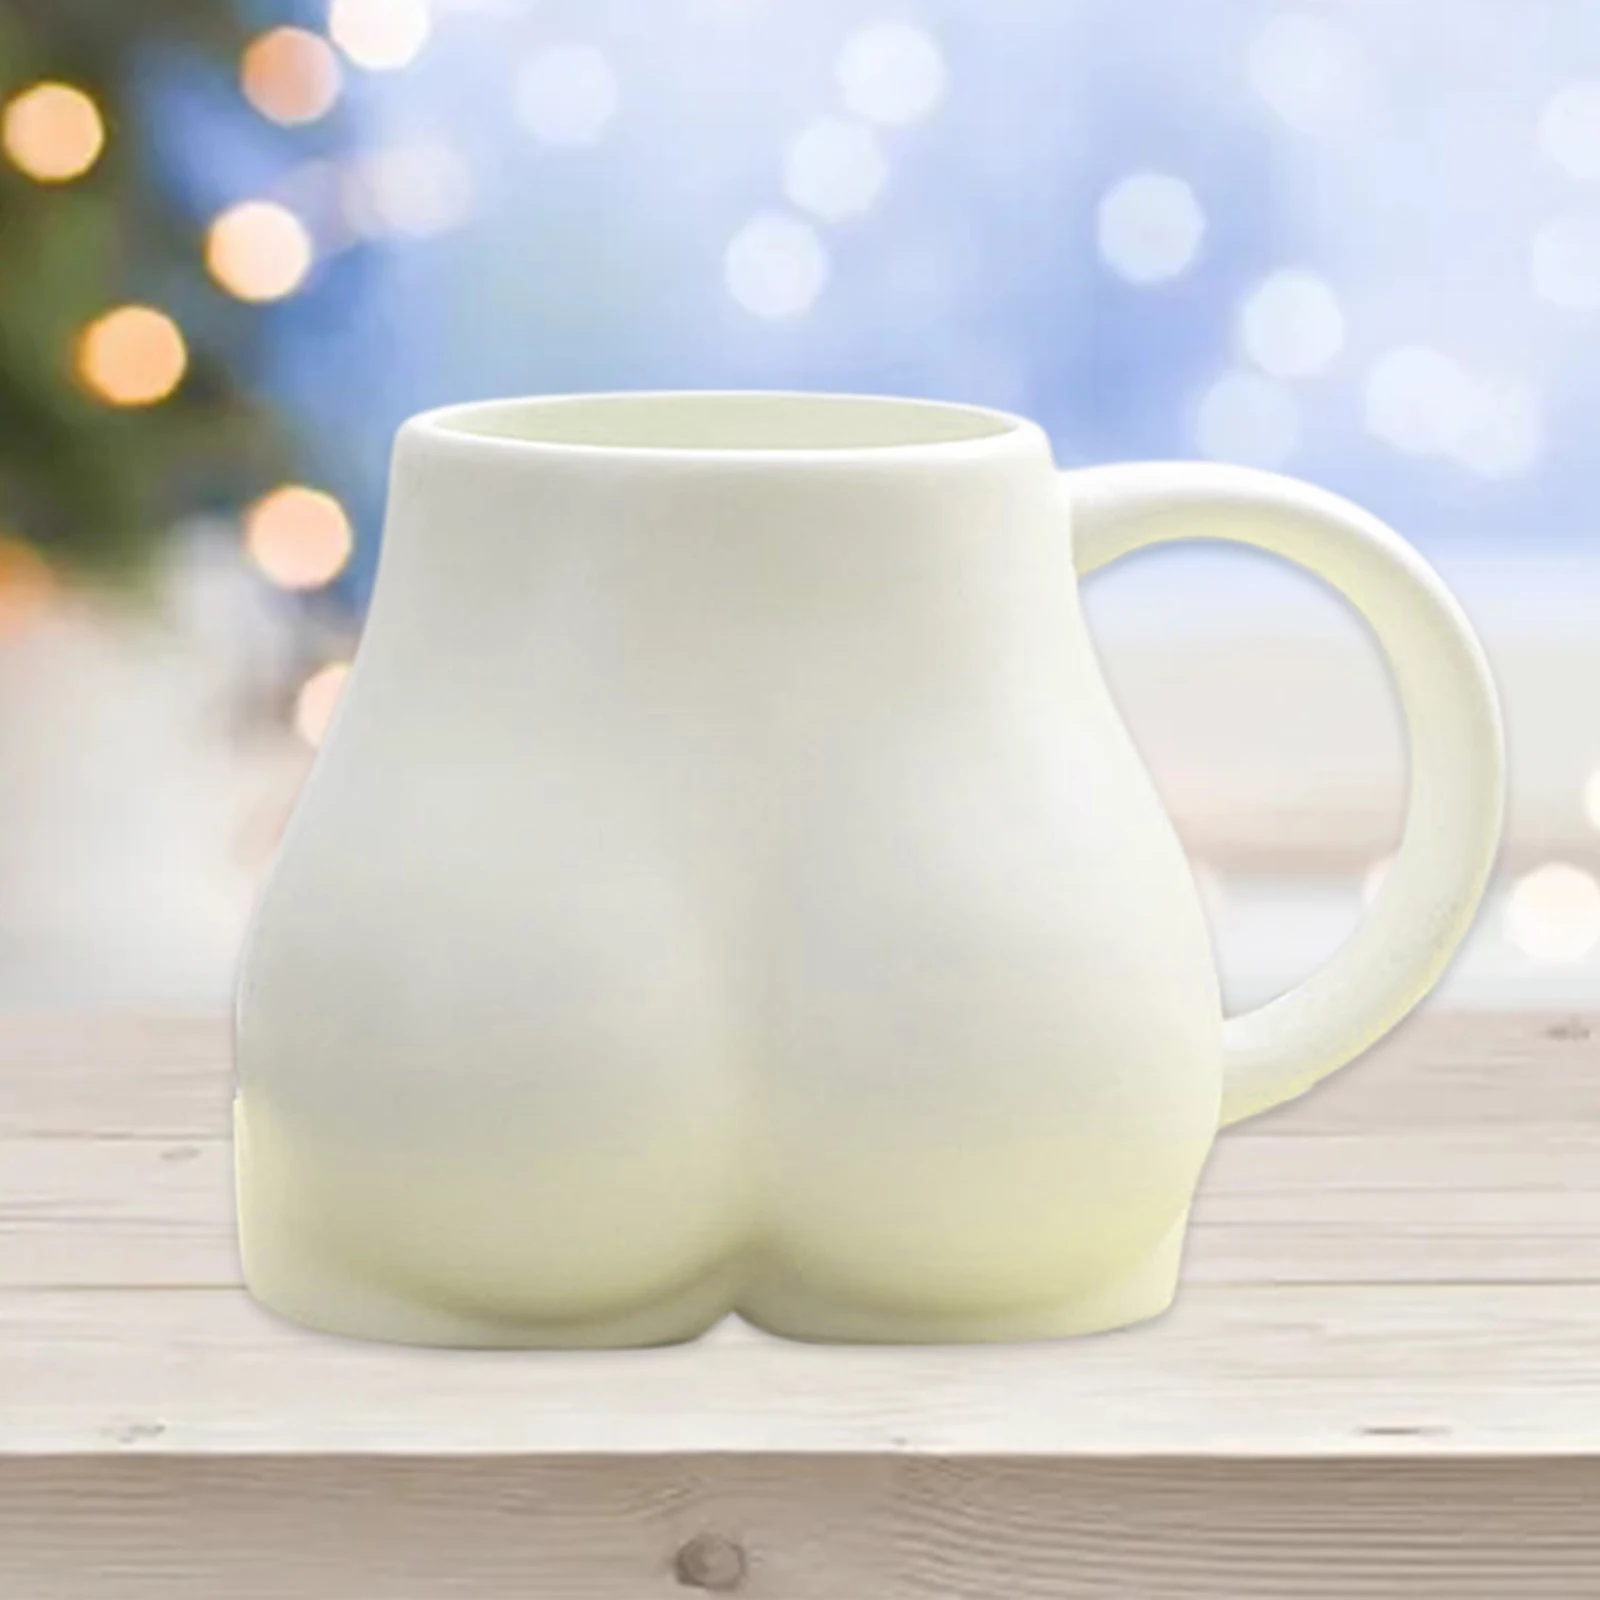 300ml Coffee Mug Woman Body Butt Cup Drinkware Decor Accessories Gifts